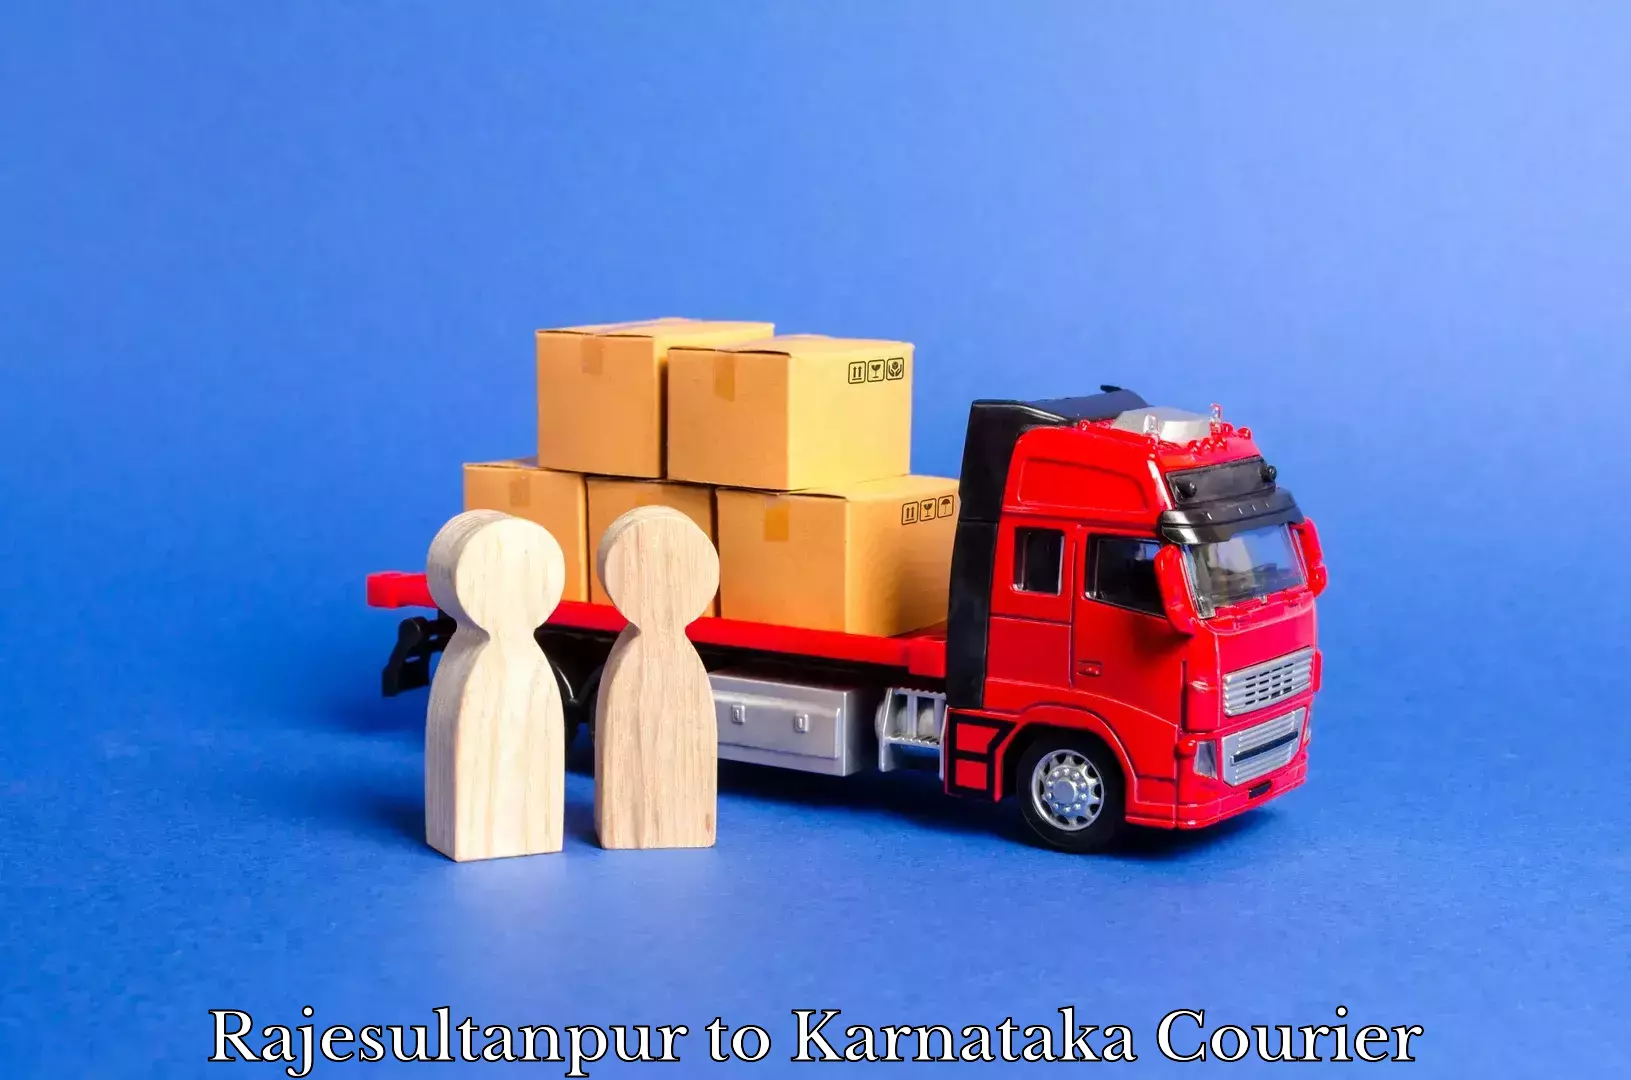 Courier insurance in Rajesultanpur to Karnataka